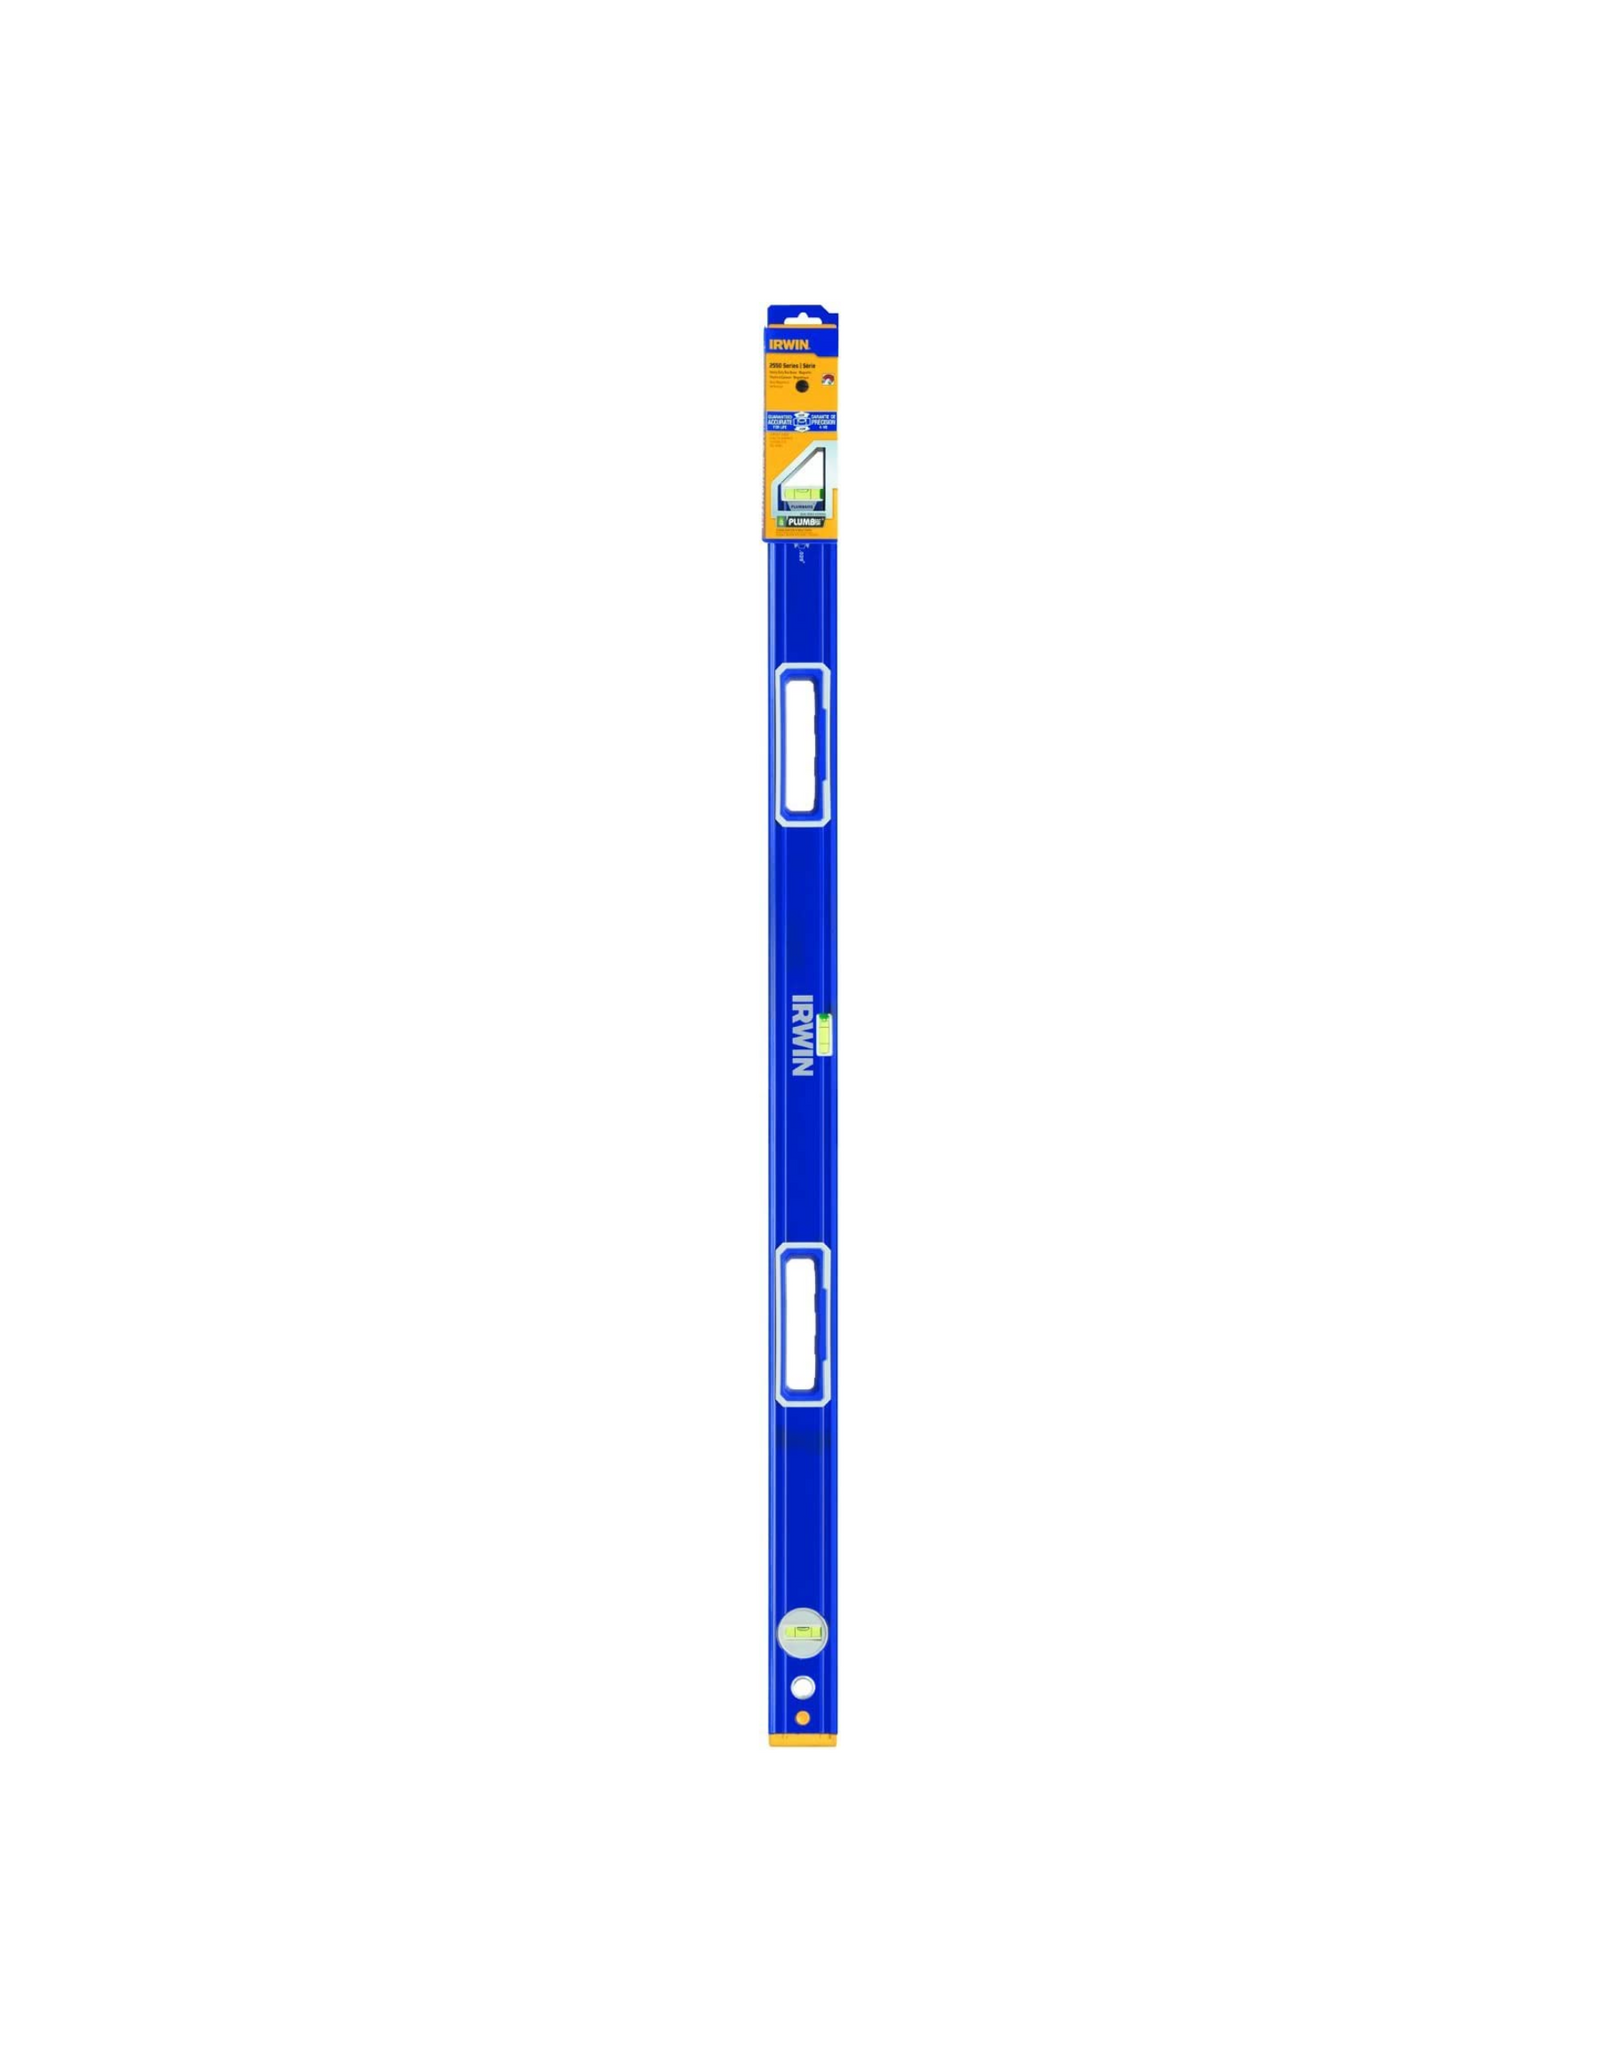 IRWIN Tools 2550 Magnetic Box Beam Level (1794068), 48 Inch, Blue